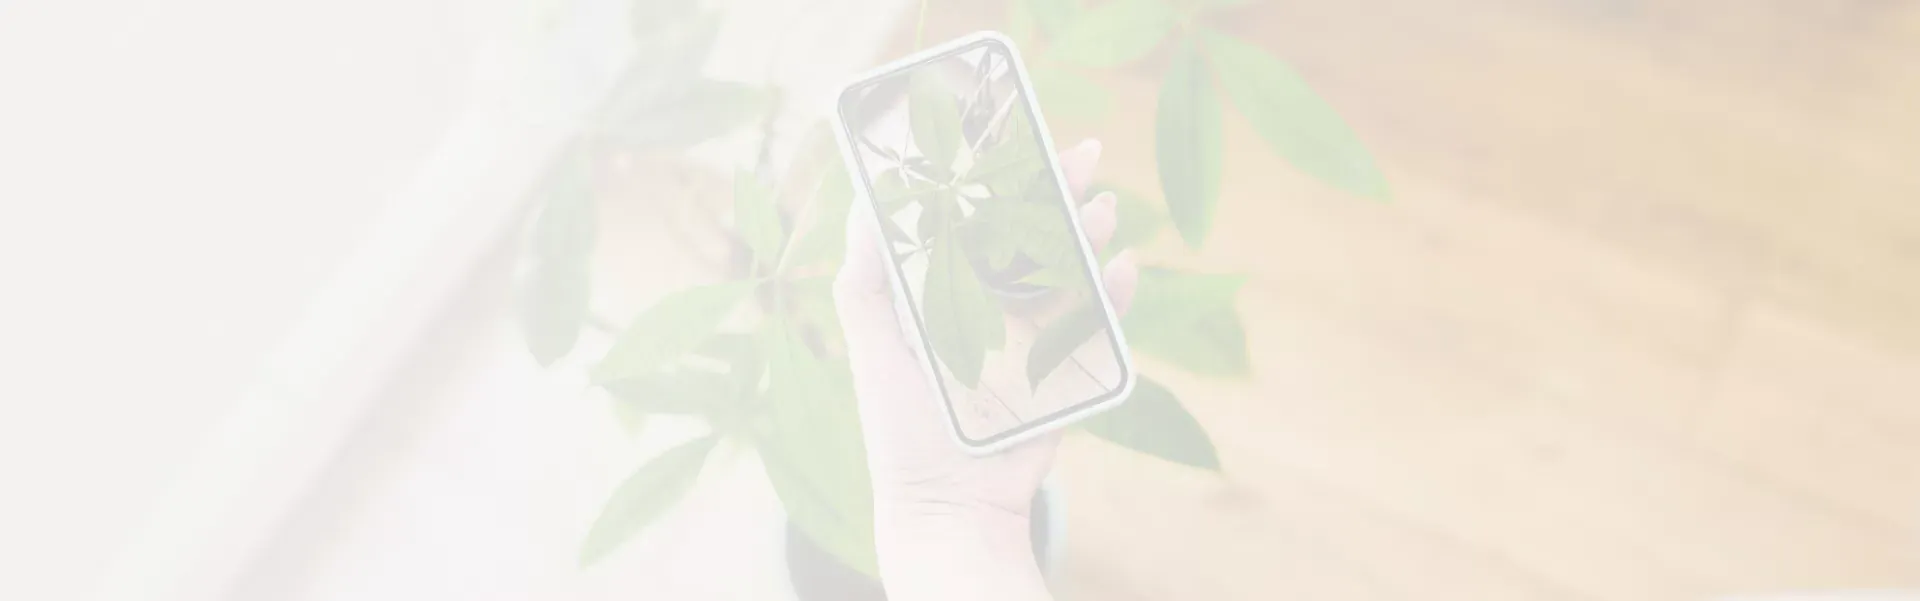 global-plant-identification-mobile-app